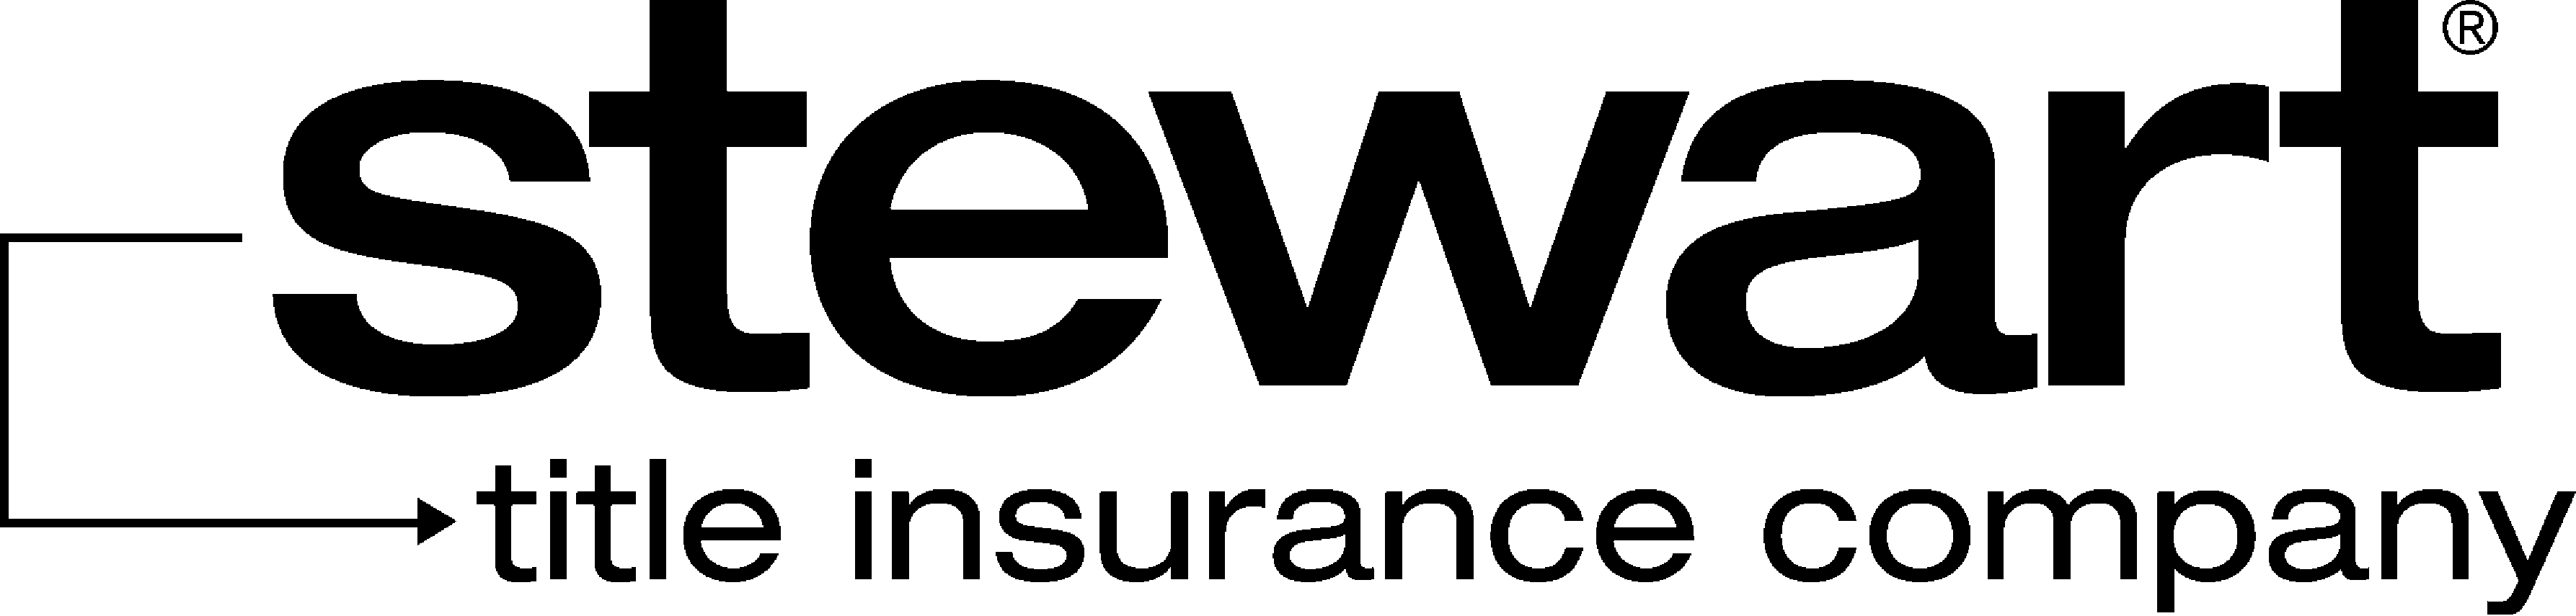 Stewart Title Insurance Company logo